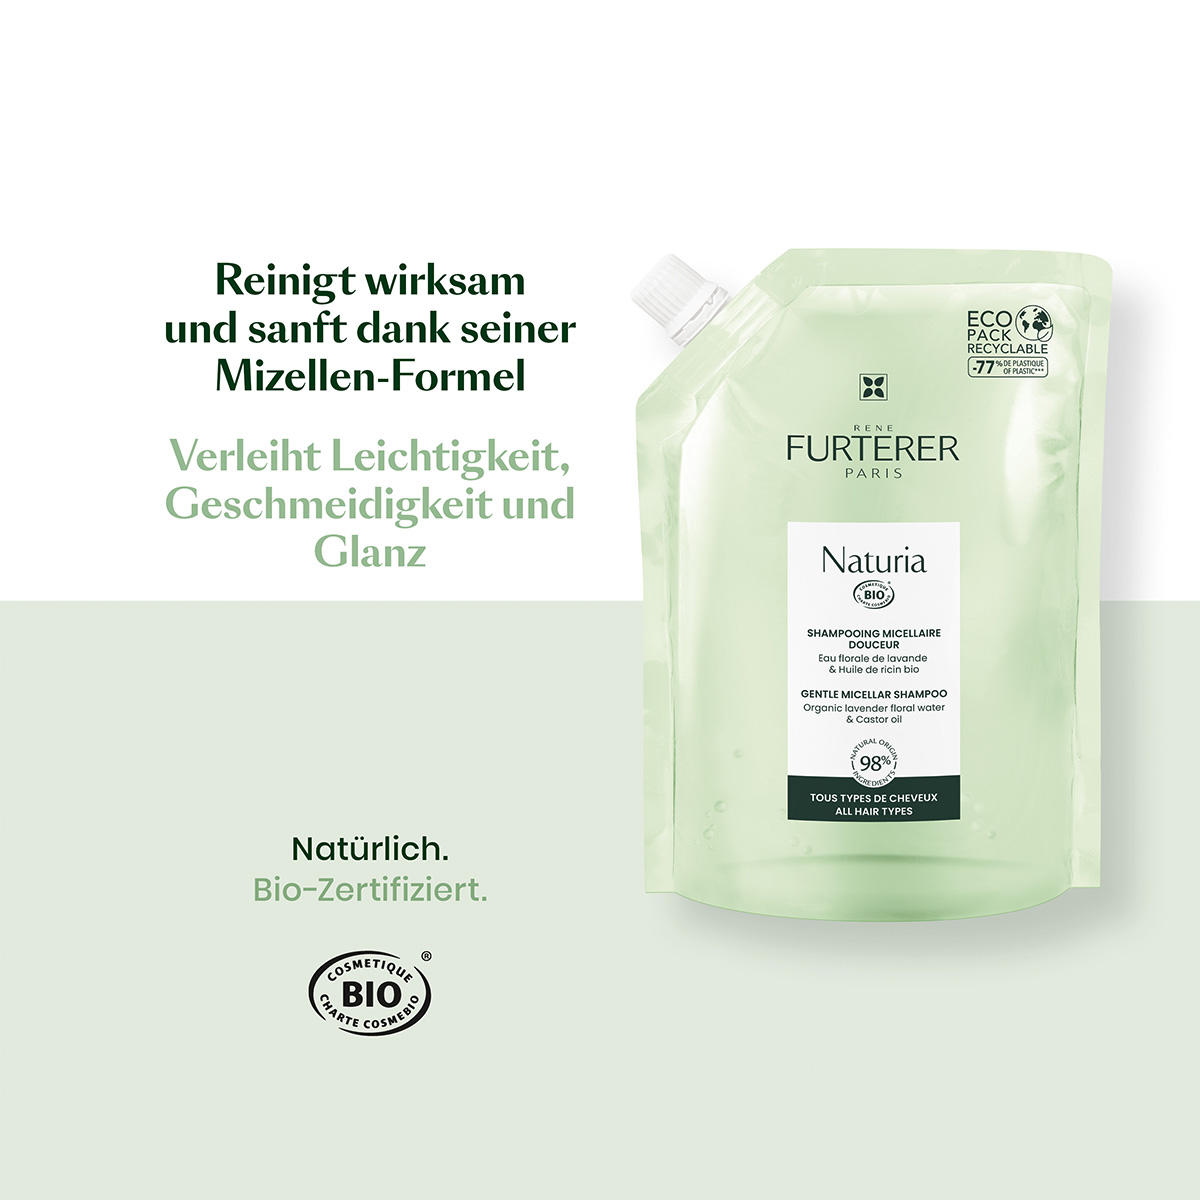 René Furterer Naturia Gentle Micellar Shampoo Refill 400 ml - 7